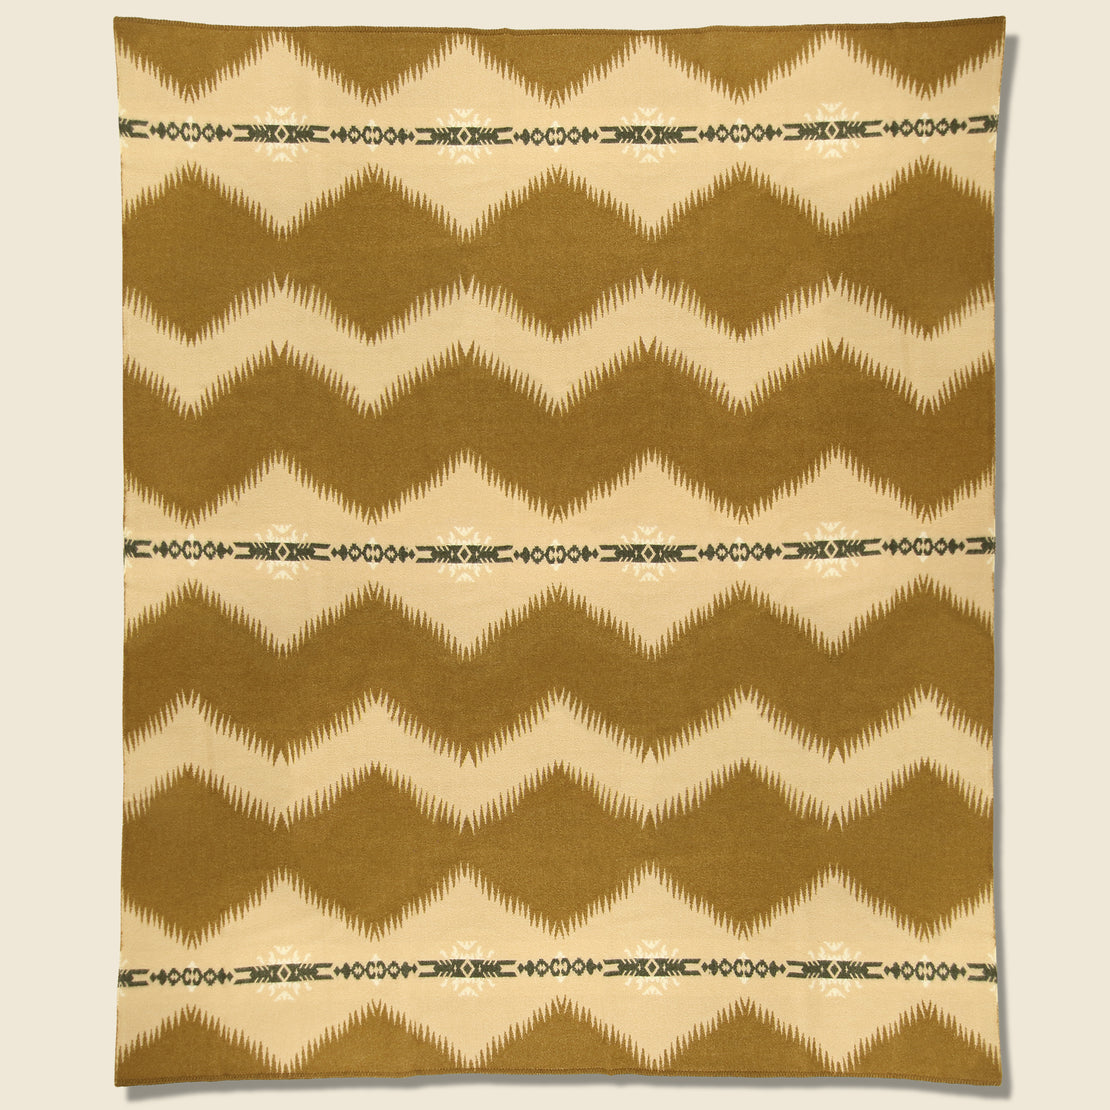 BasShu Brown Wool Jacquard Blanket